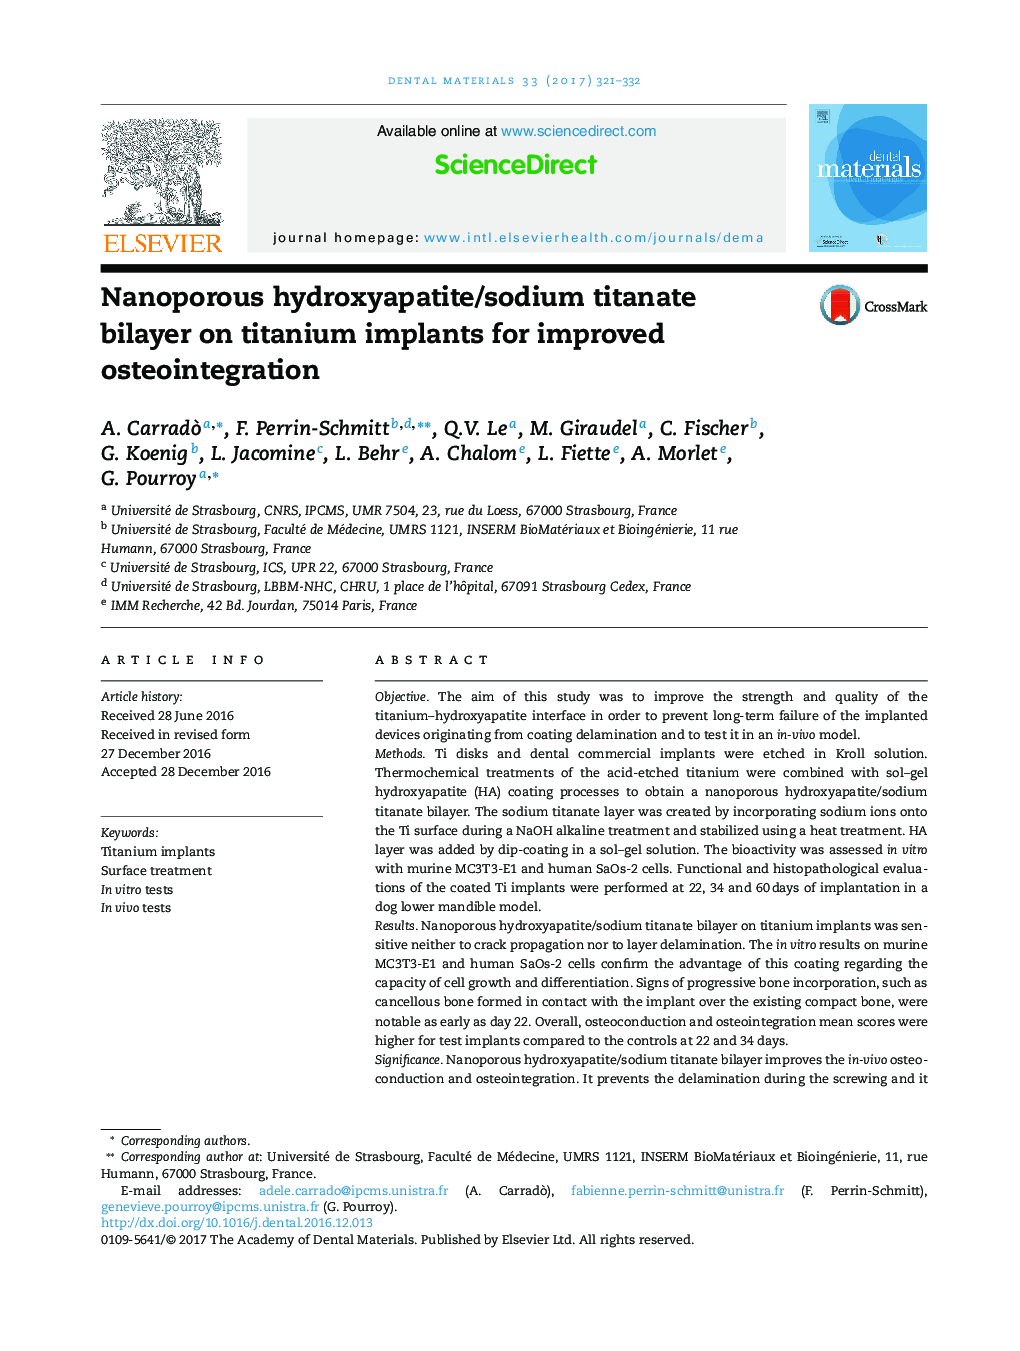 Nanoporous hydroxyapatite/sodium titanate bilayer on titanium implants for improved osteointegration